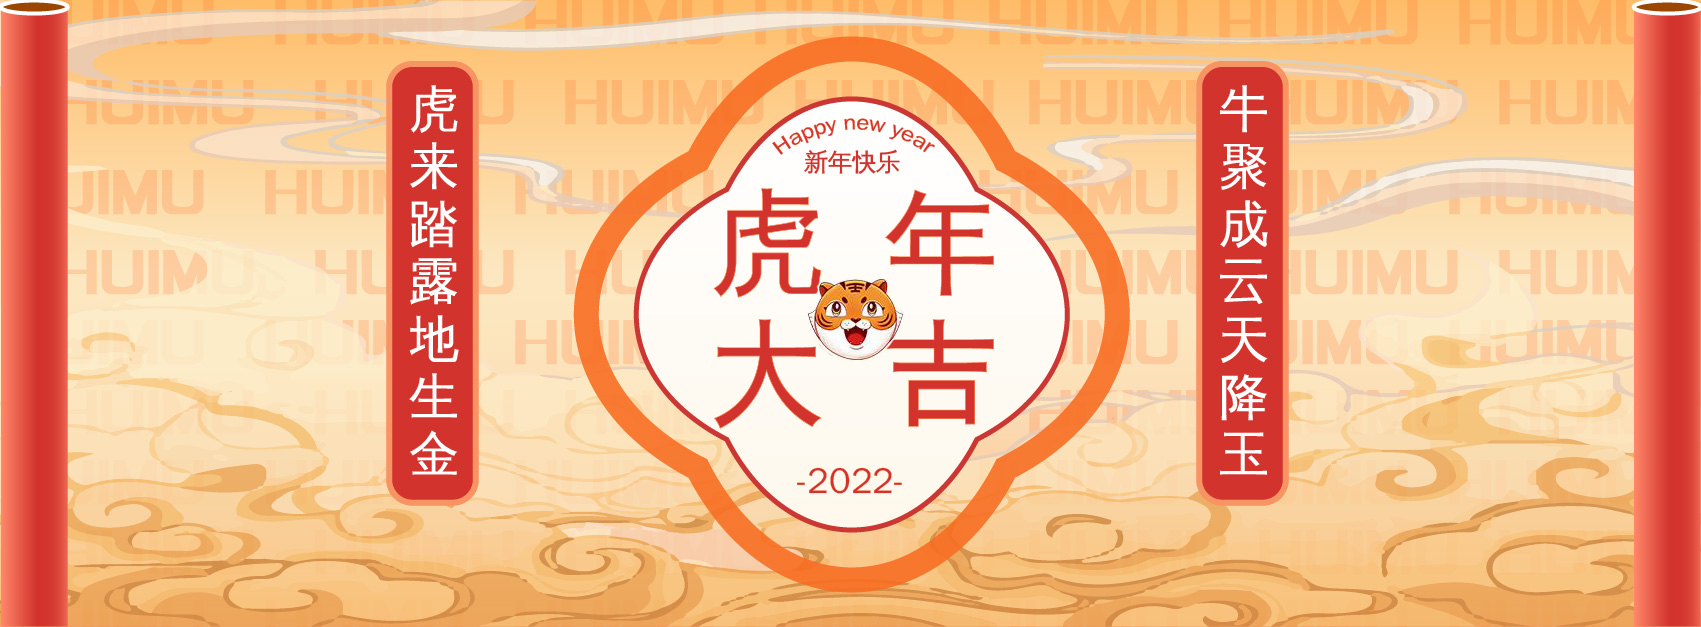 Tiger Year, Spring Festival Holiday